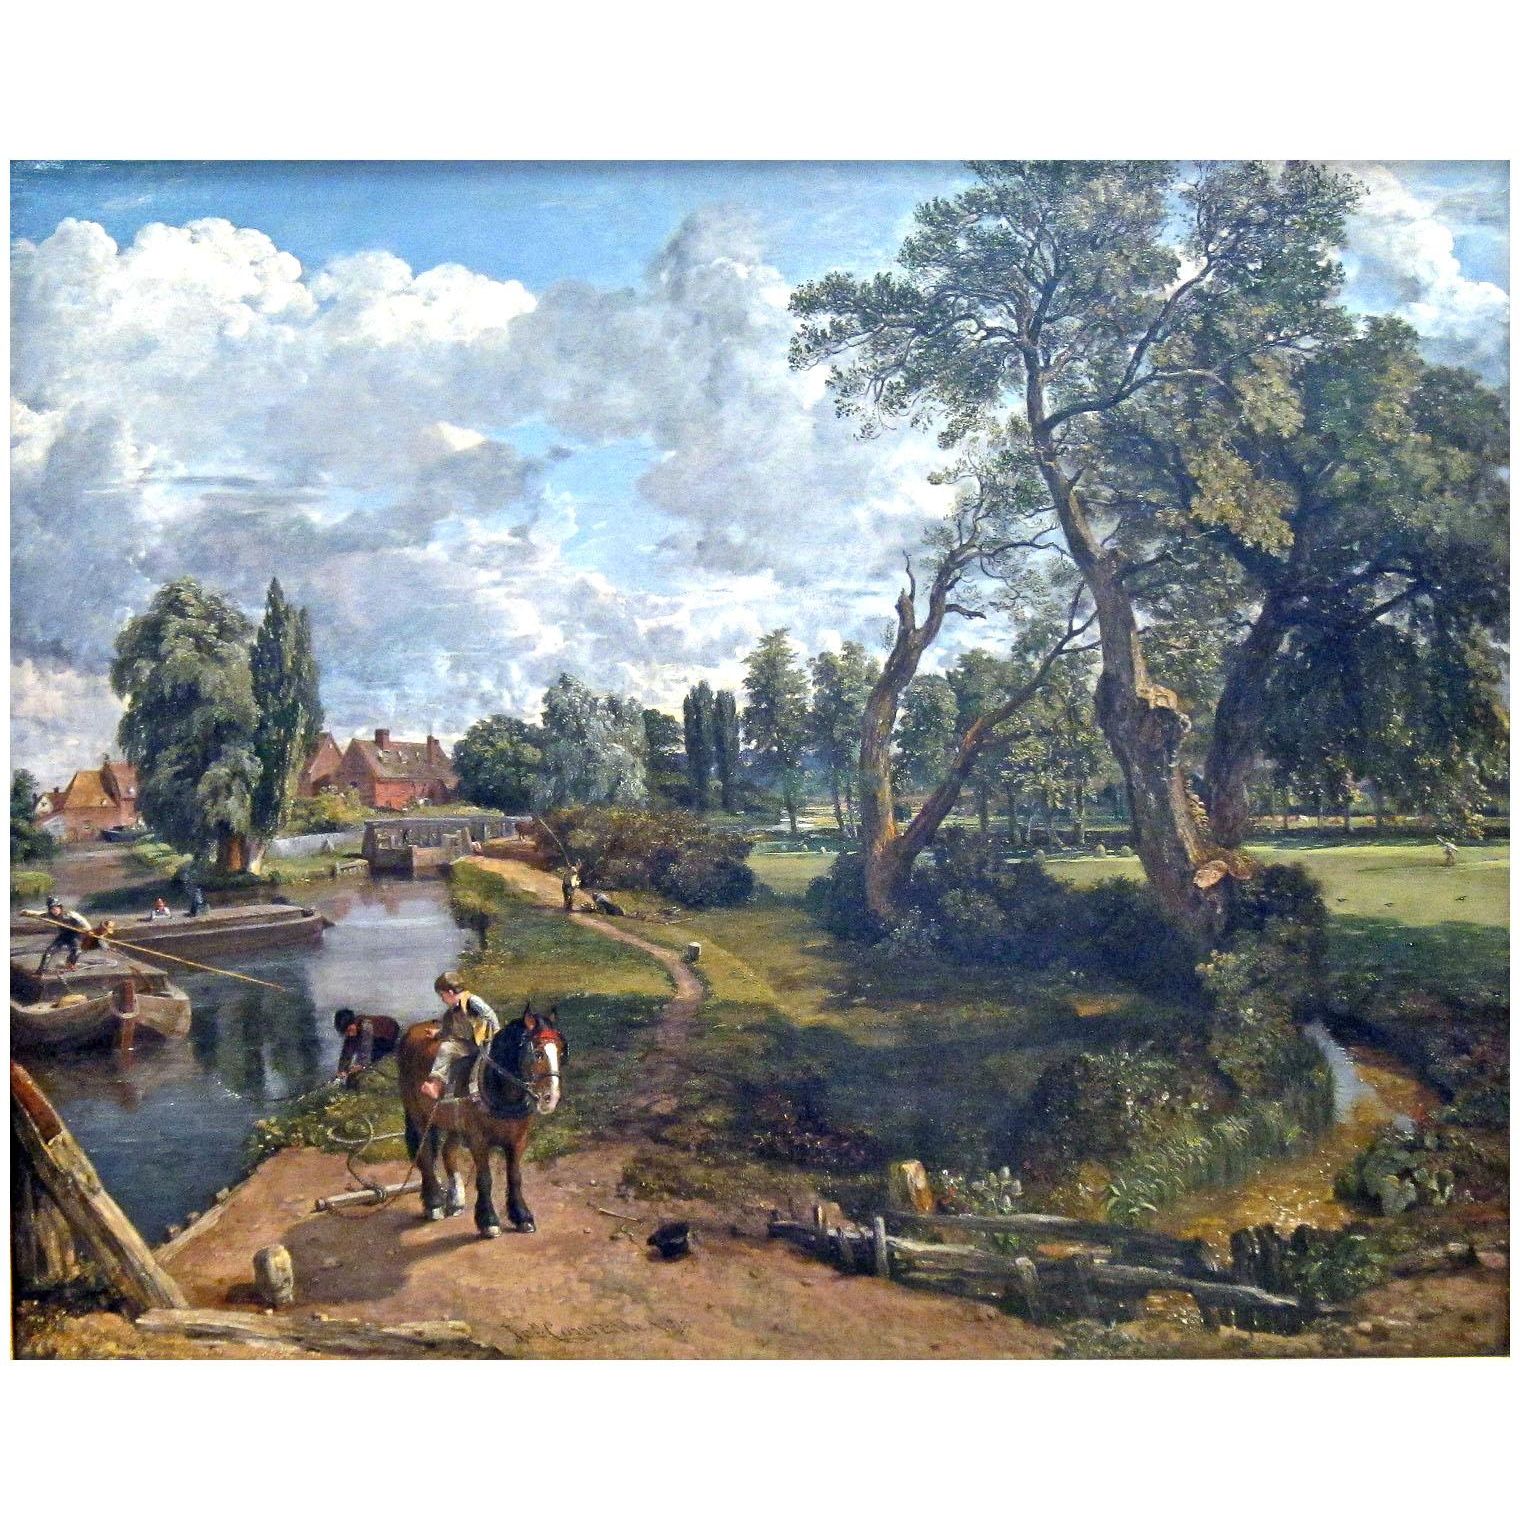 John Constable. Flatford Mill. 1816. Tate Britain